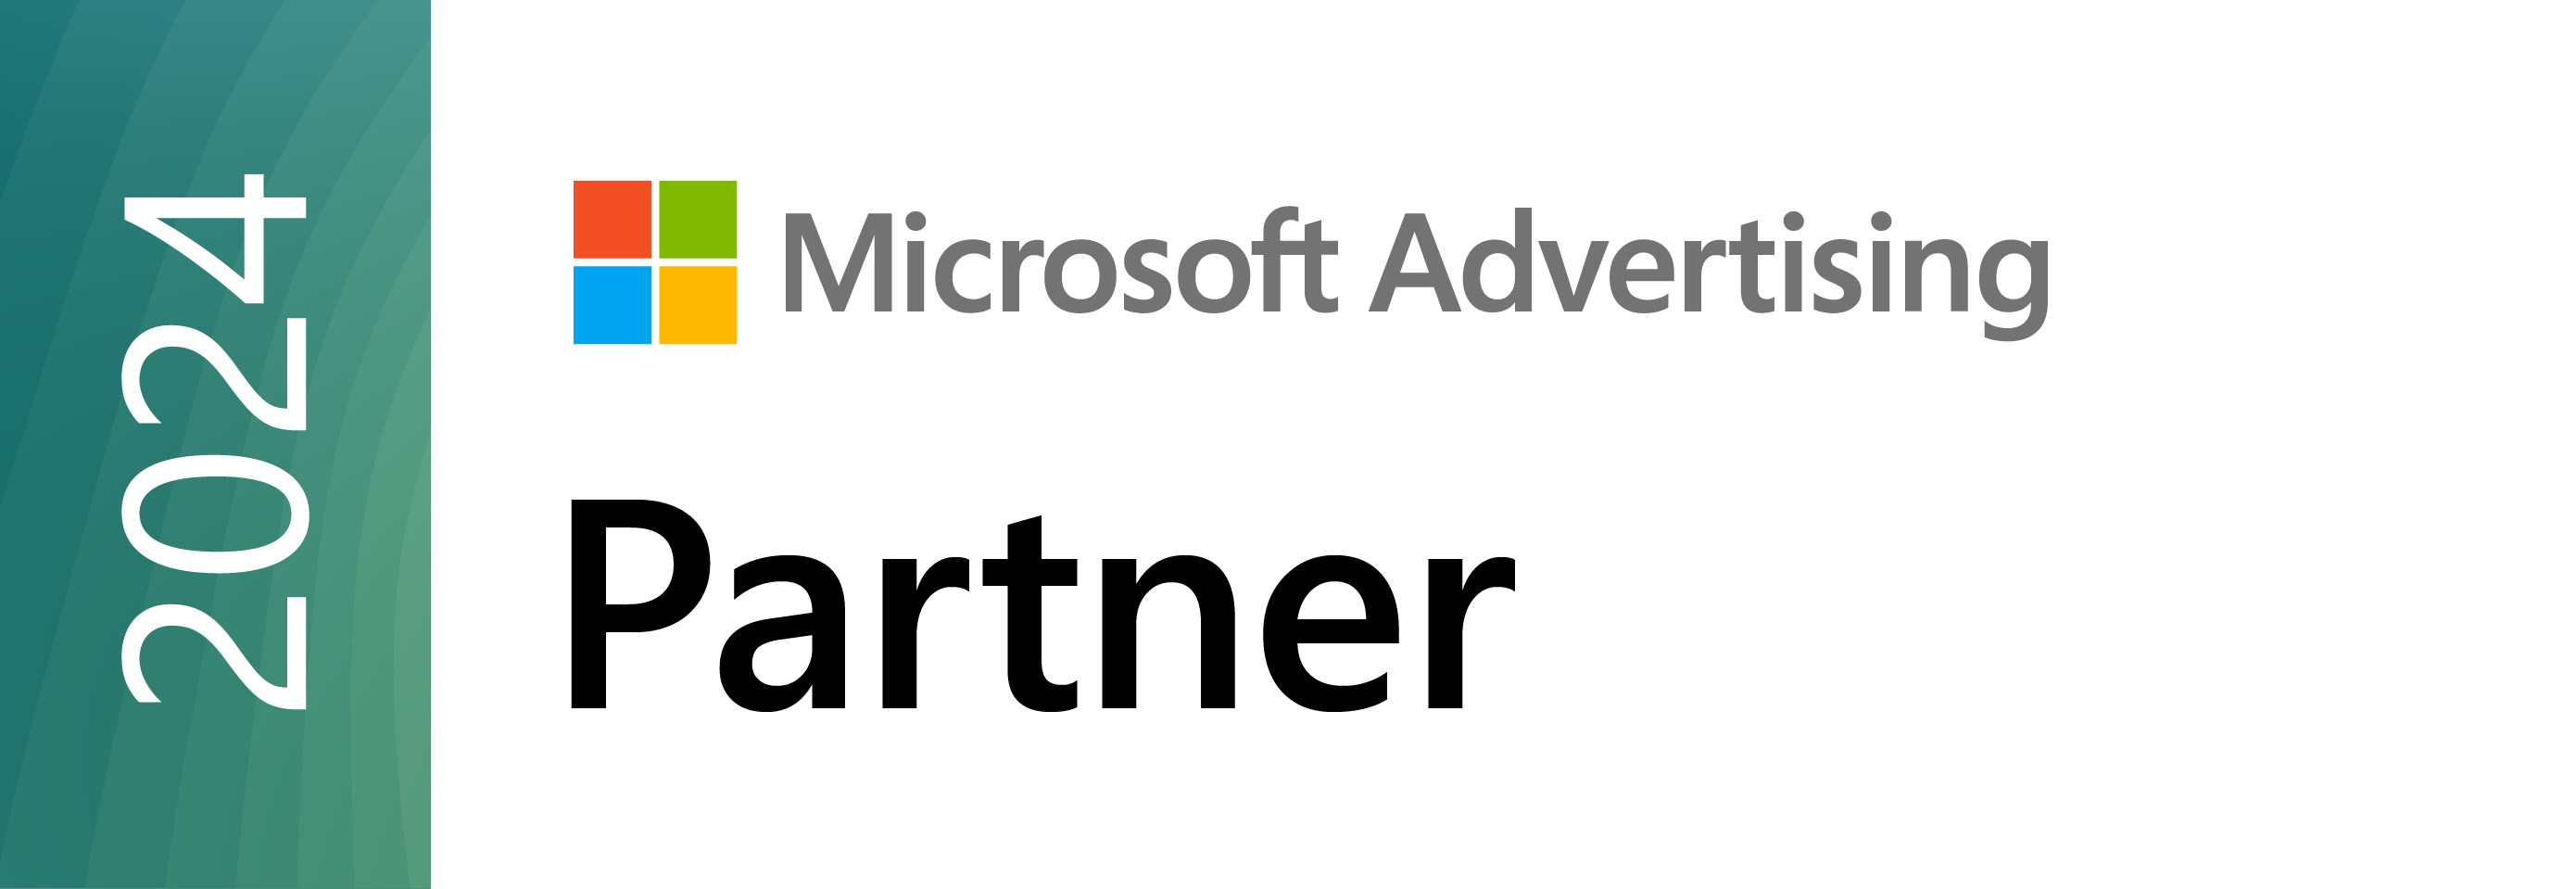 Microsoft Advertising Partner, Schweiz - Swisscrow GmbH